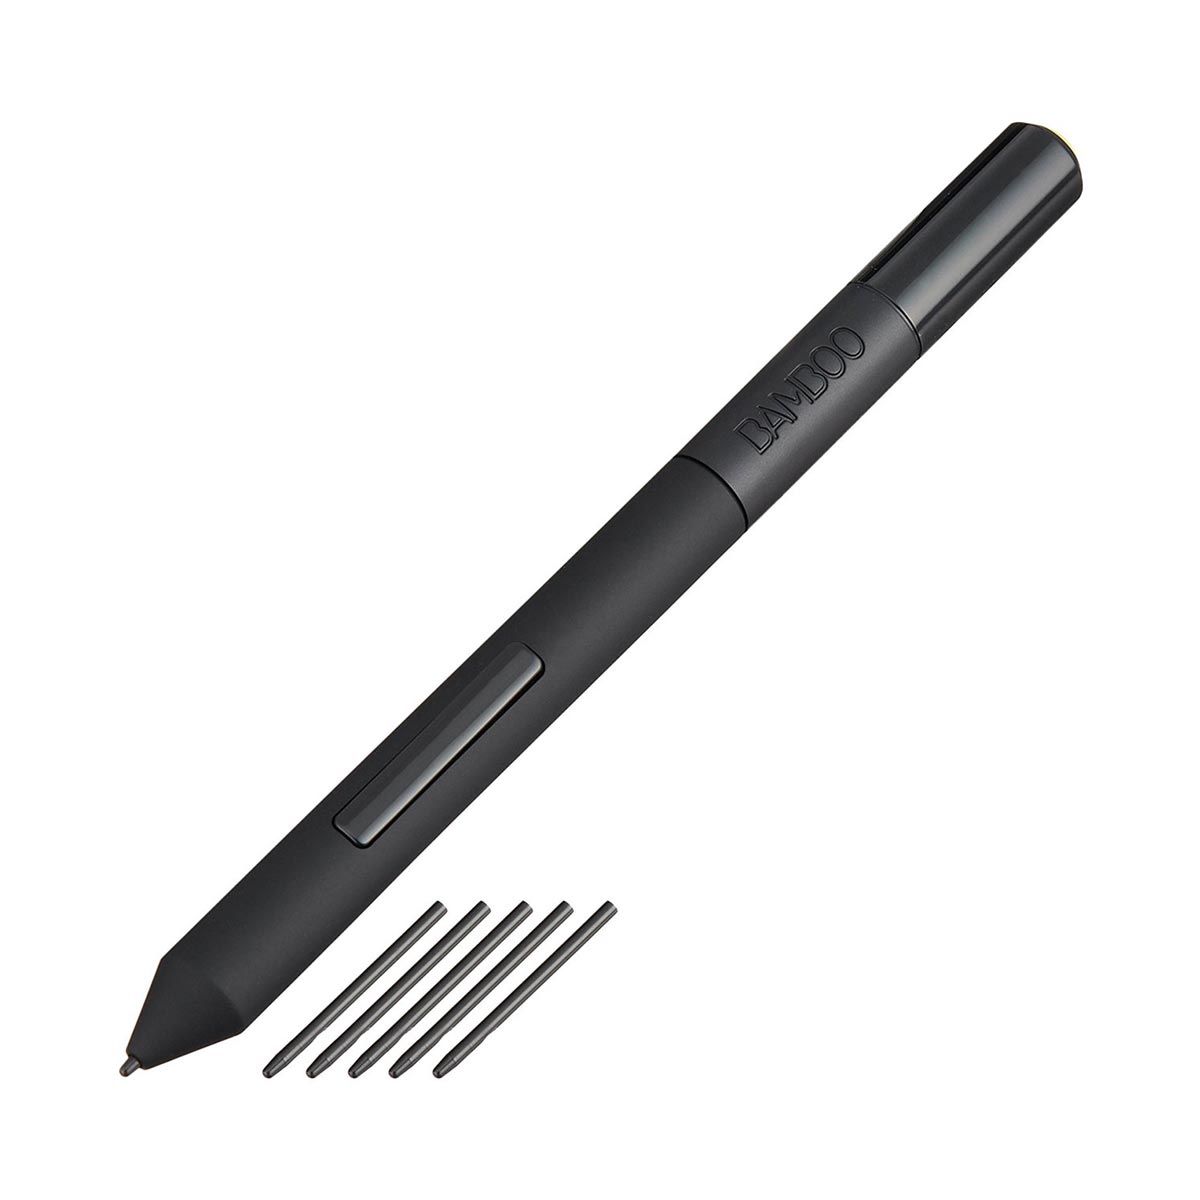 Pen ctl. Перо Wacom LP-170e-ok для Bamboo Pen&Touch CTH-470k. Bamboo Pen CTL-470. Bamboo Pen CTL-470 стилус. Wacom Bamboo Pen CTL-470 стилус.